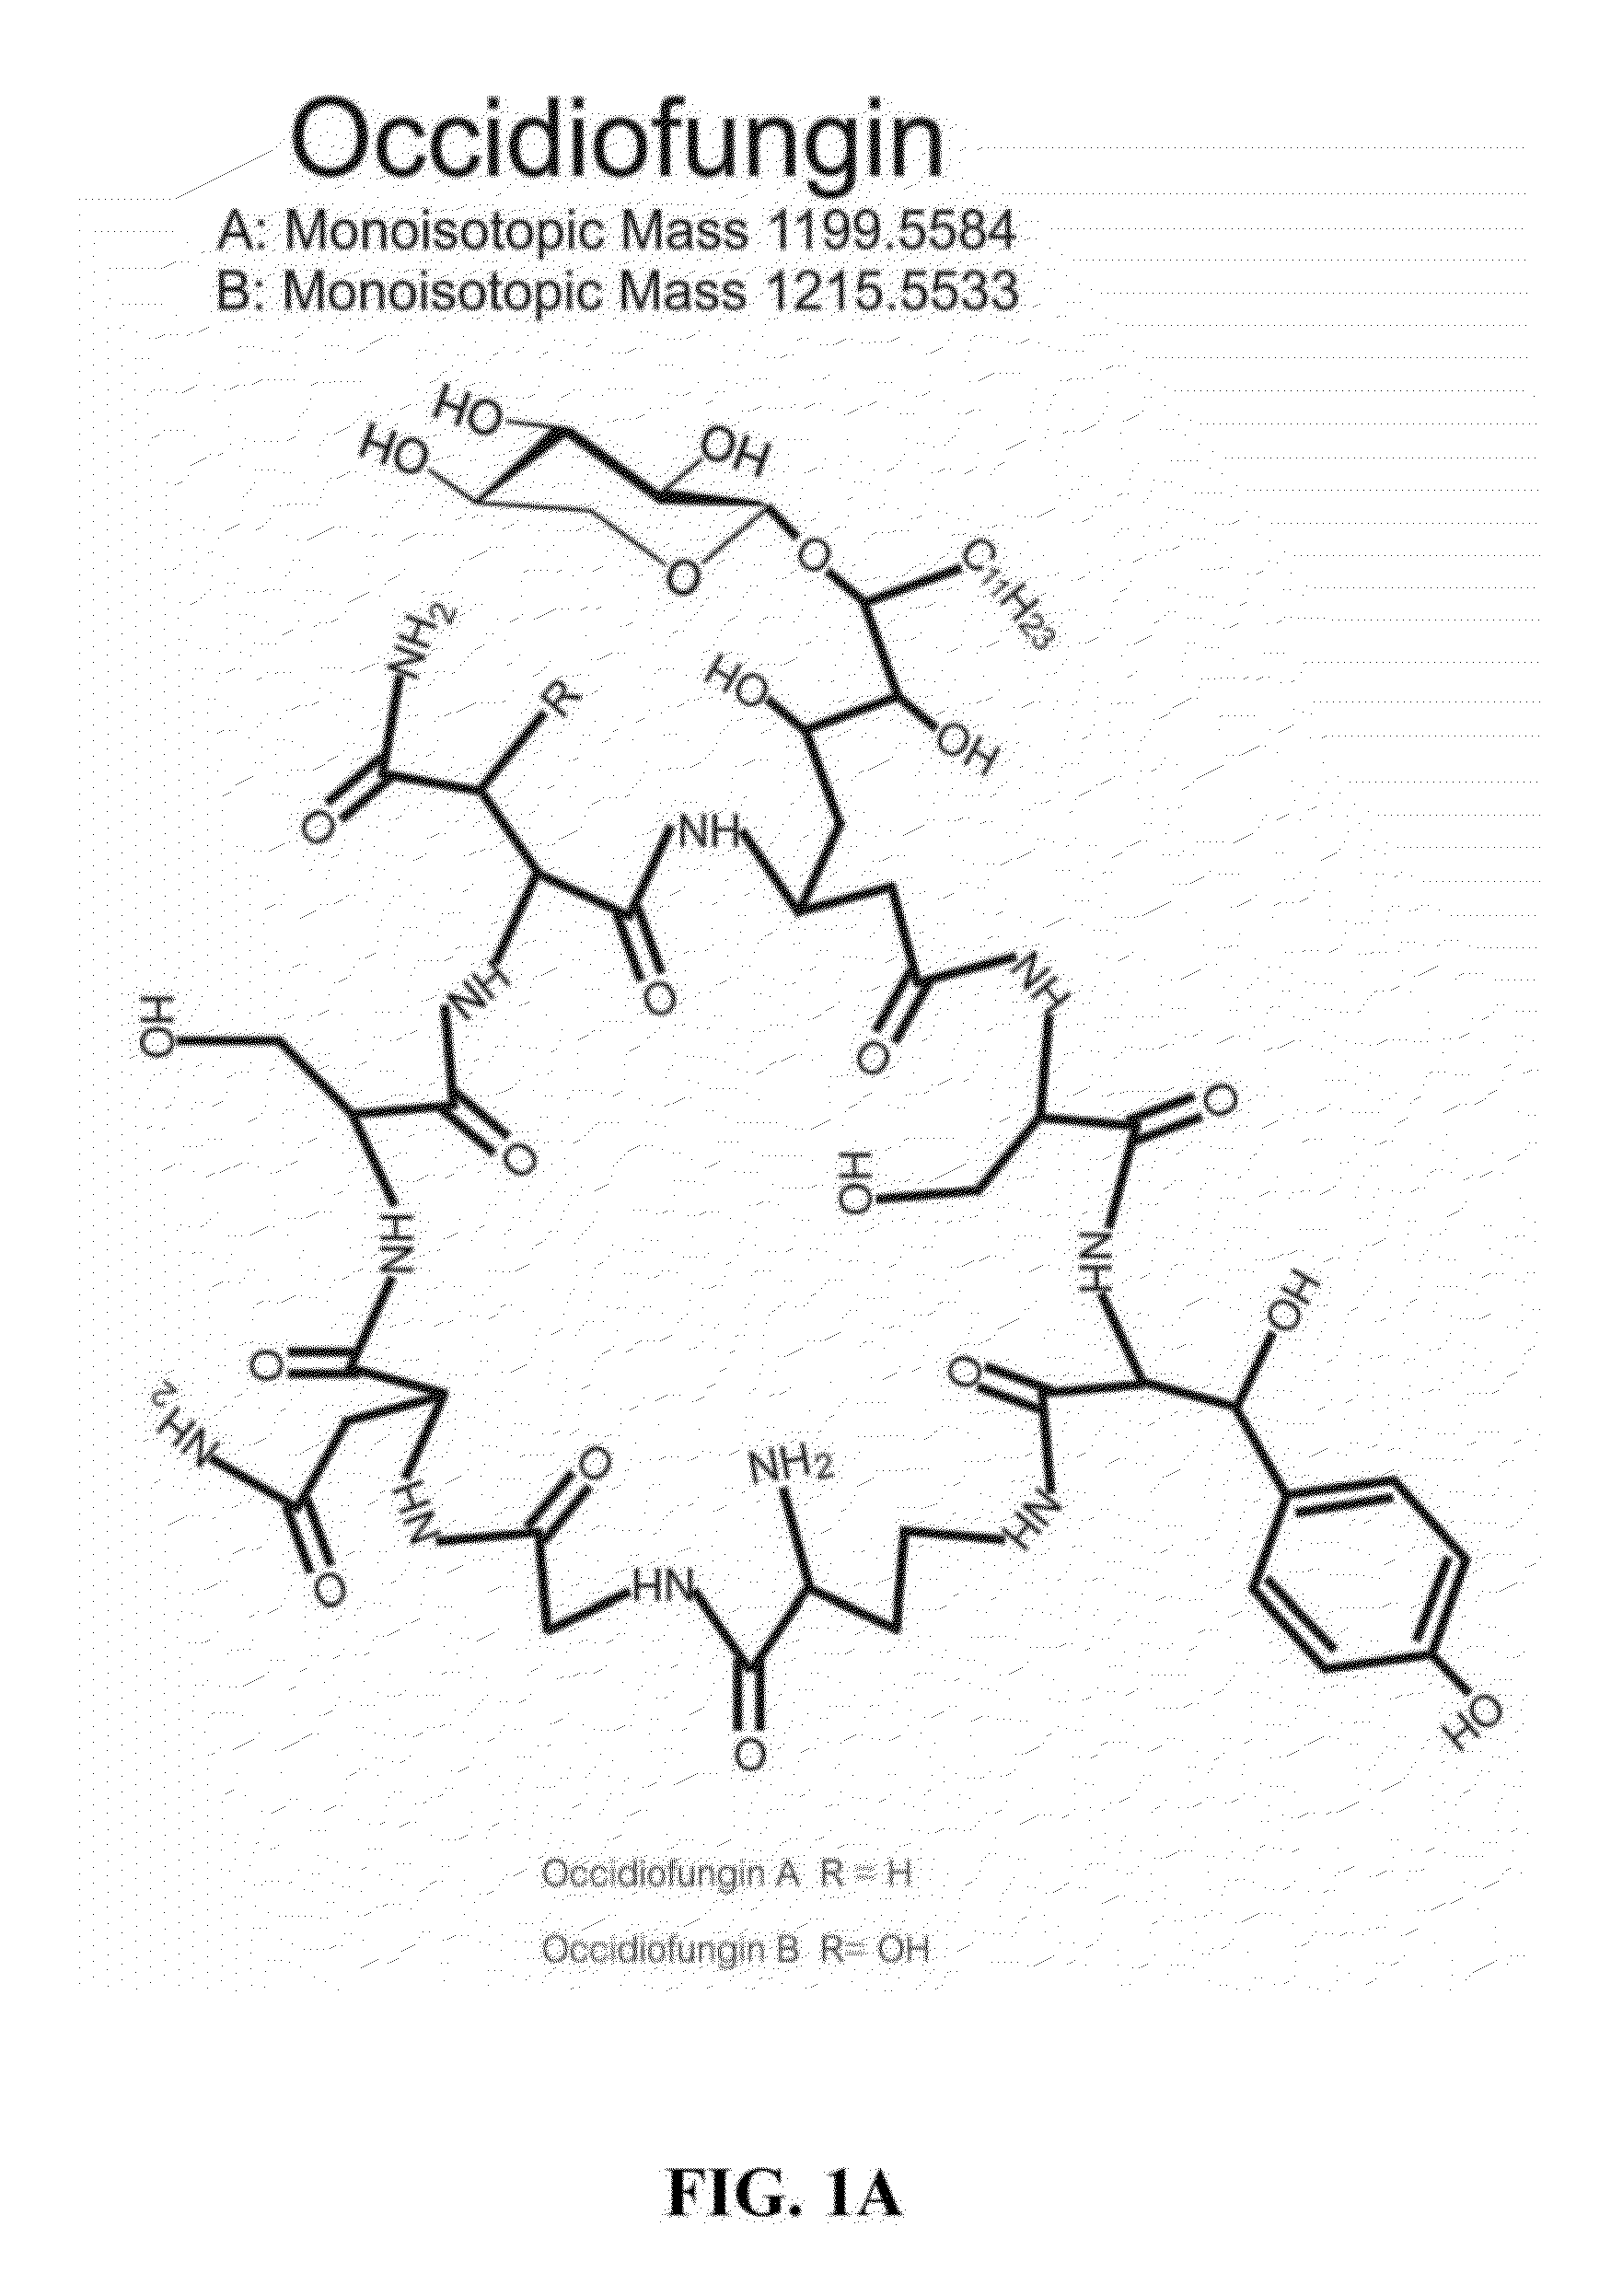 Occidiofungin, a unique antifungal glycopeptide produced by a strain of Burkholderia contaminans